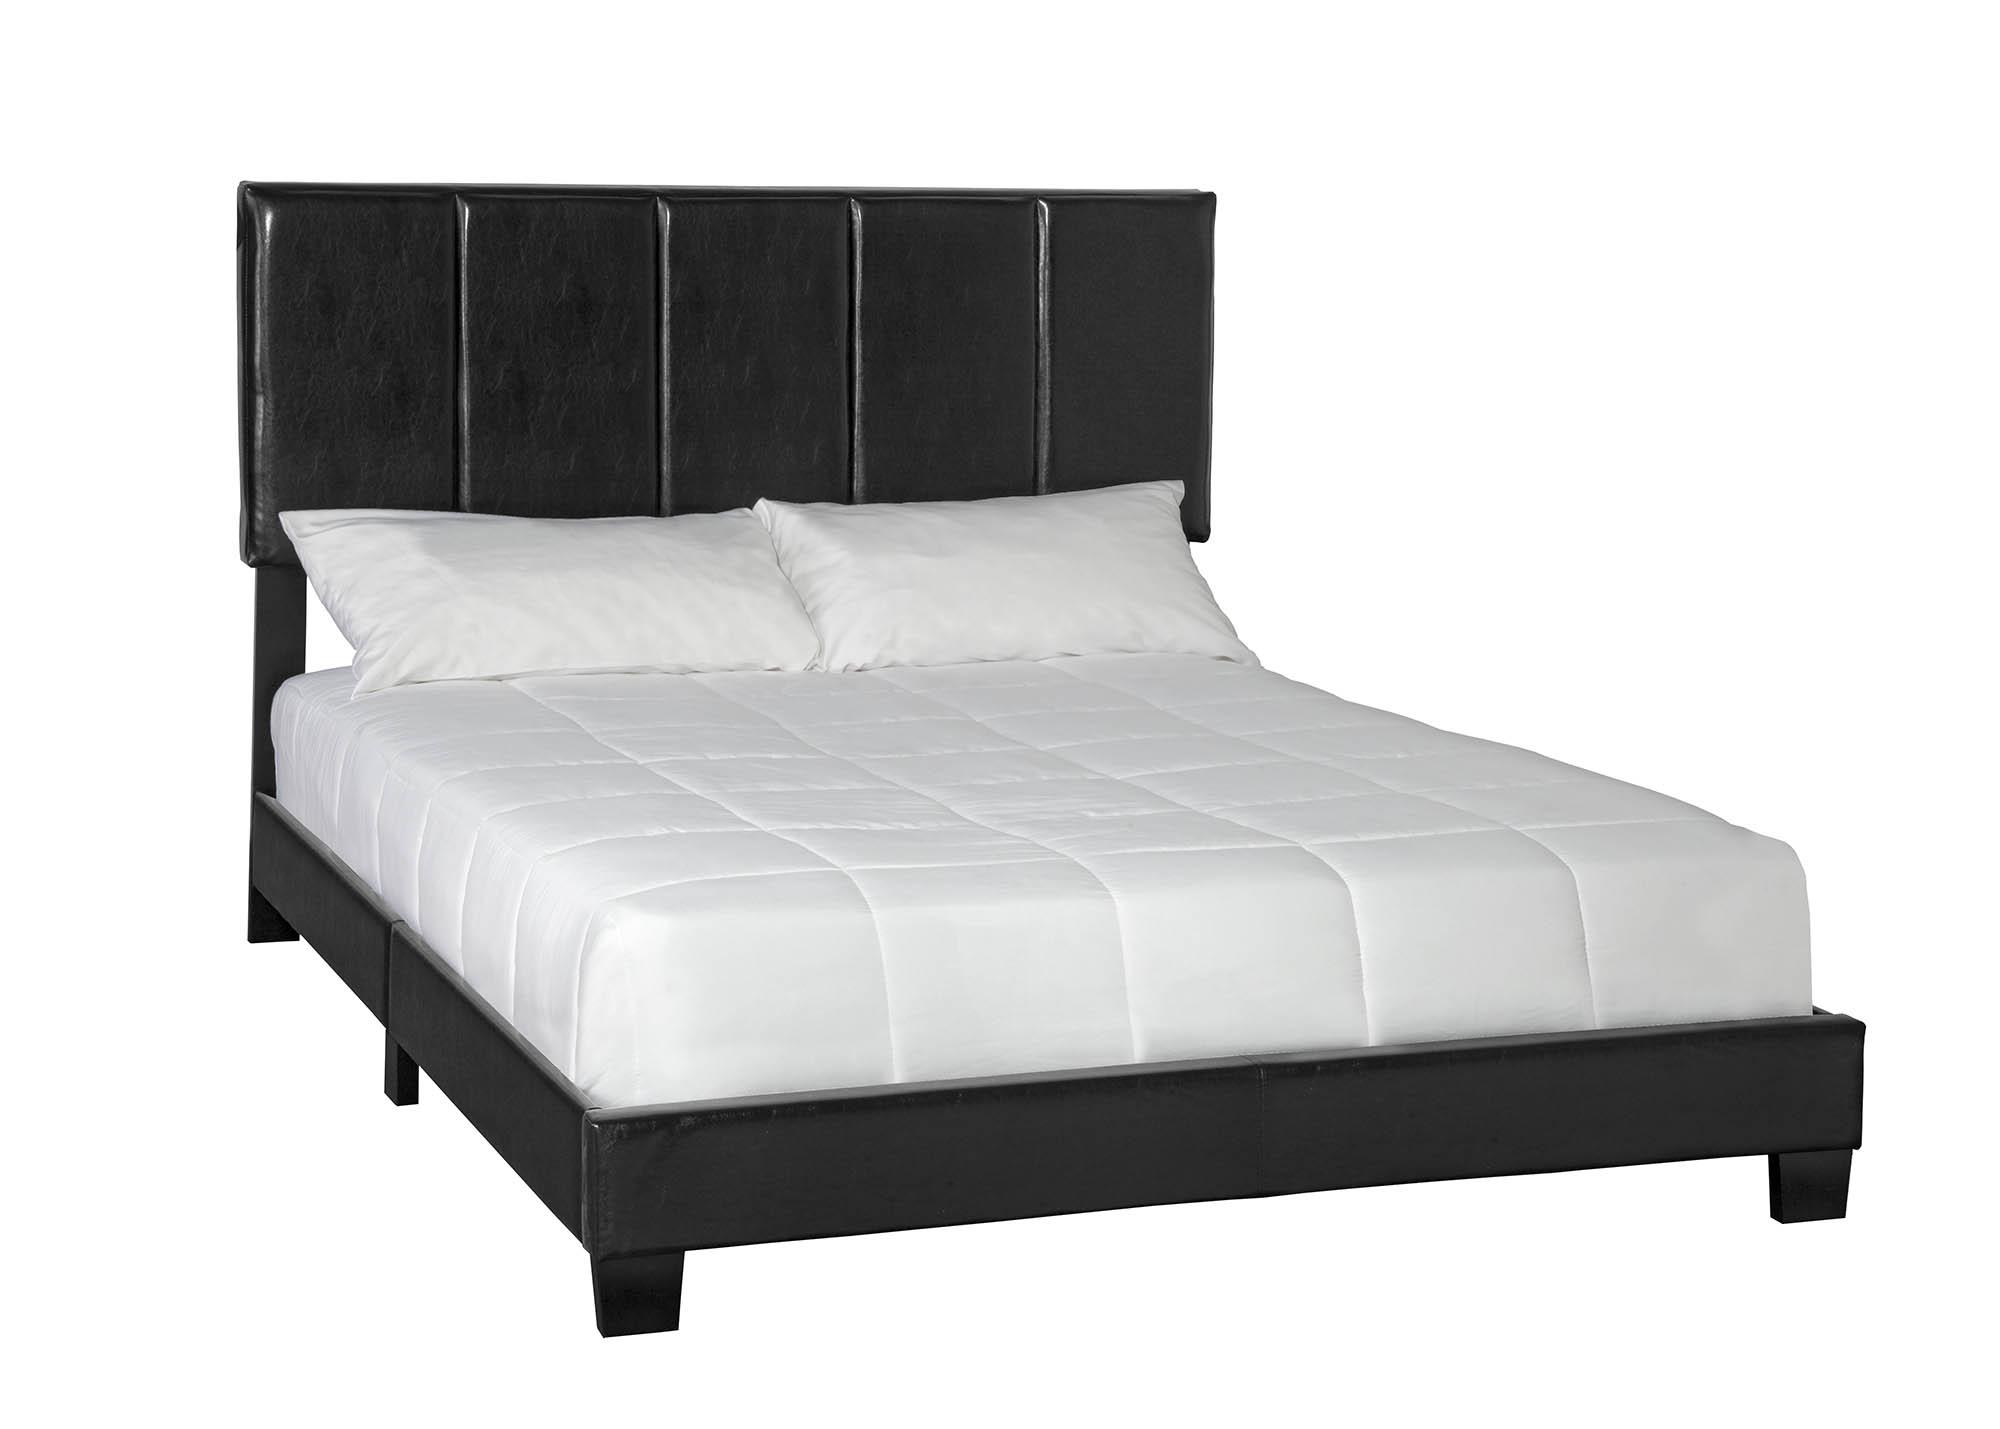 Modern, Transitional Panel Bed HARPER 1601-104 1601-104 in Black Eco Leather